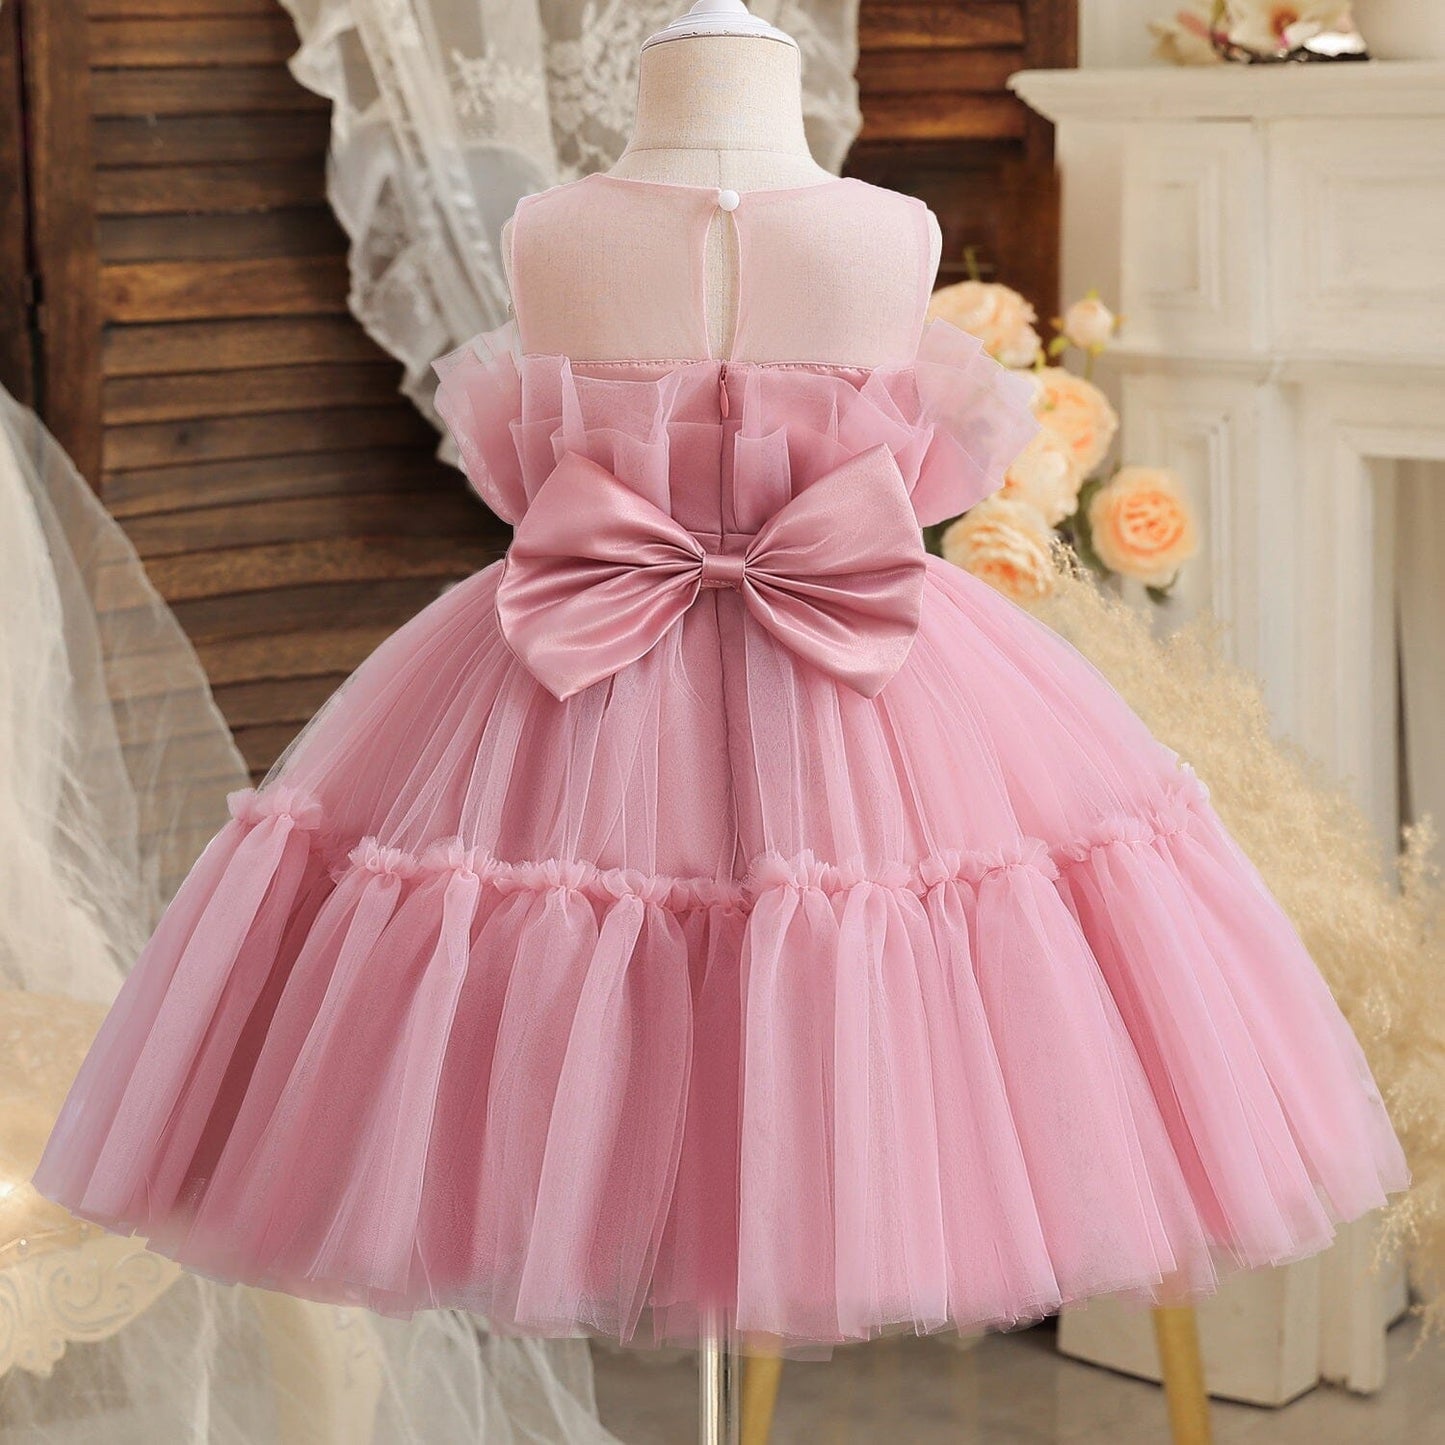 Girls Children Toddler Ruffle Sleeveless Big Bow Princess Tulle Sundress girls dress jehouze Pink 766 6M 